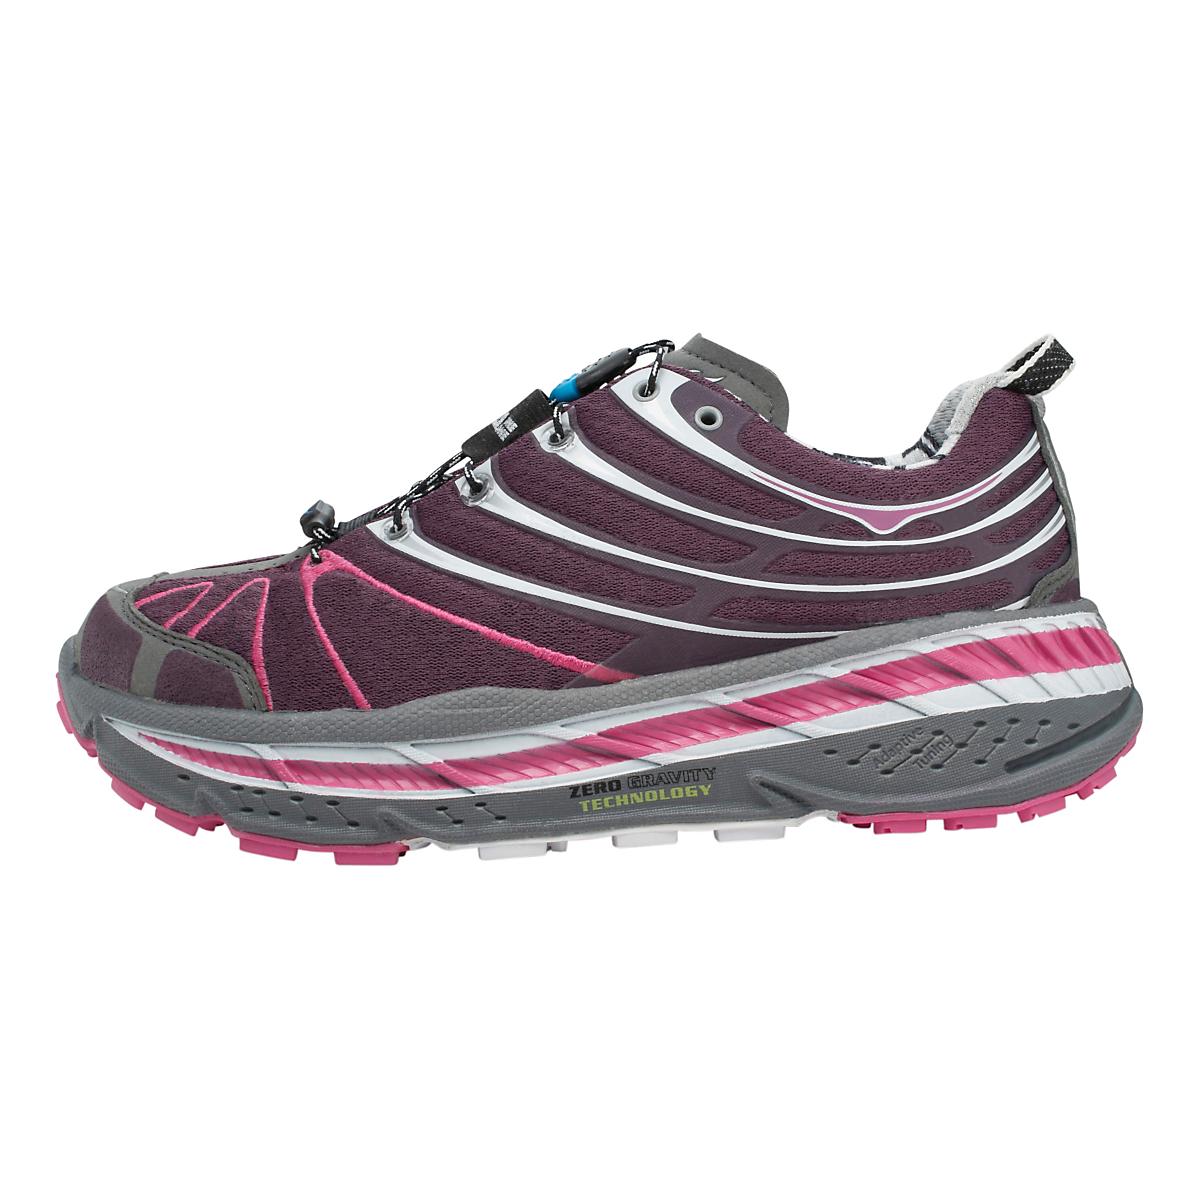 Womens Hoka One One Stinson ATR Trail Running Shoe at Road Runner Sports